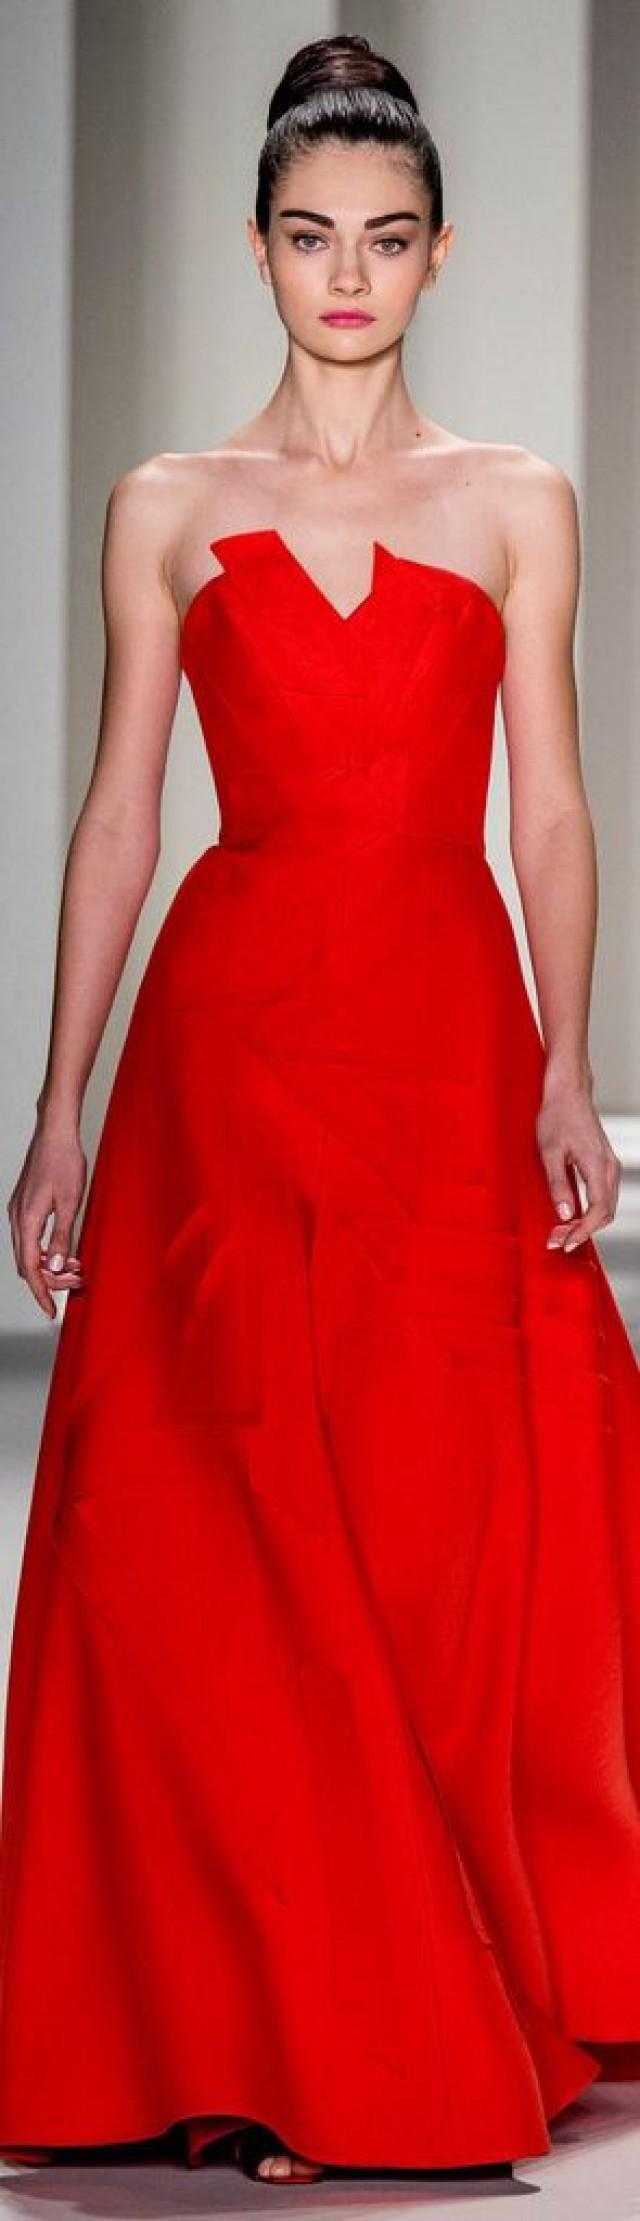 Bridesmaid - Gowns...Ravishing Reds #2149089 - Weddbook